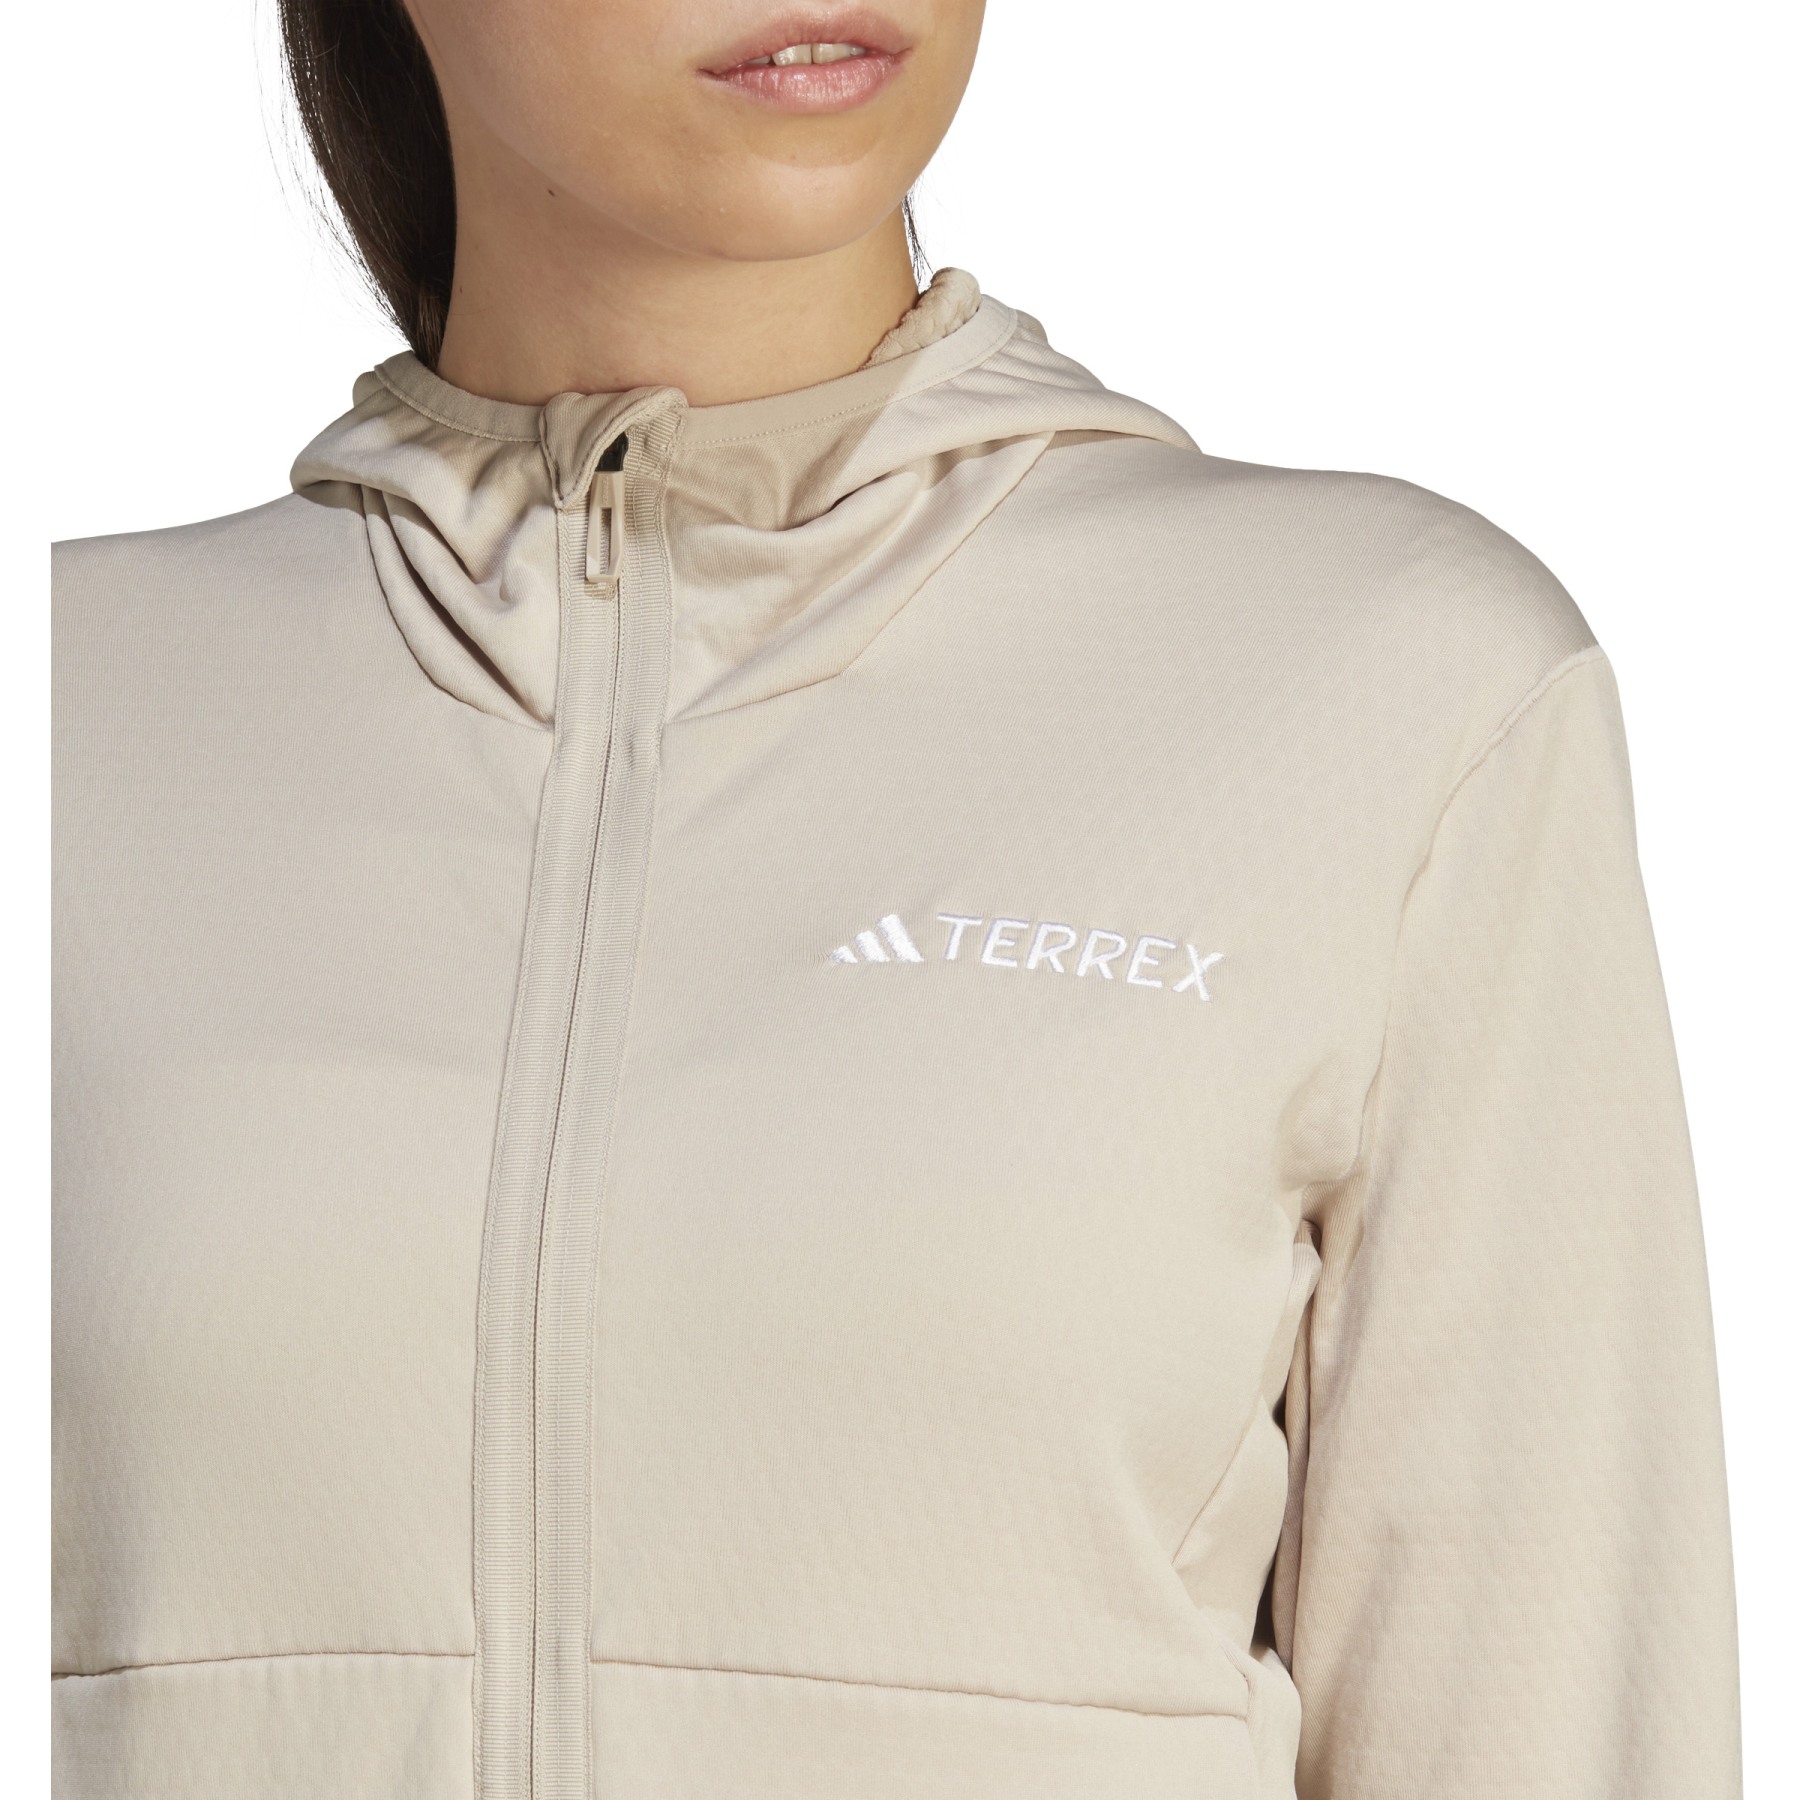 Light IB1820 - Jacket beige Hooded TERREX Women wonder Fleece adidas Xperior